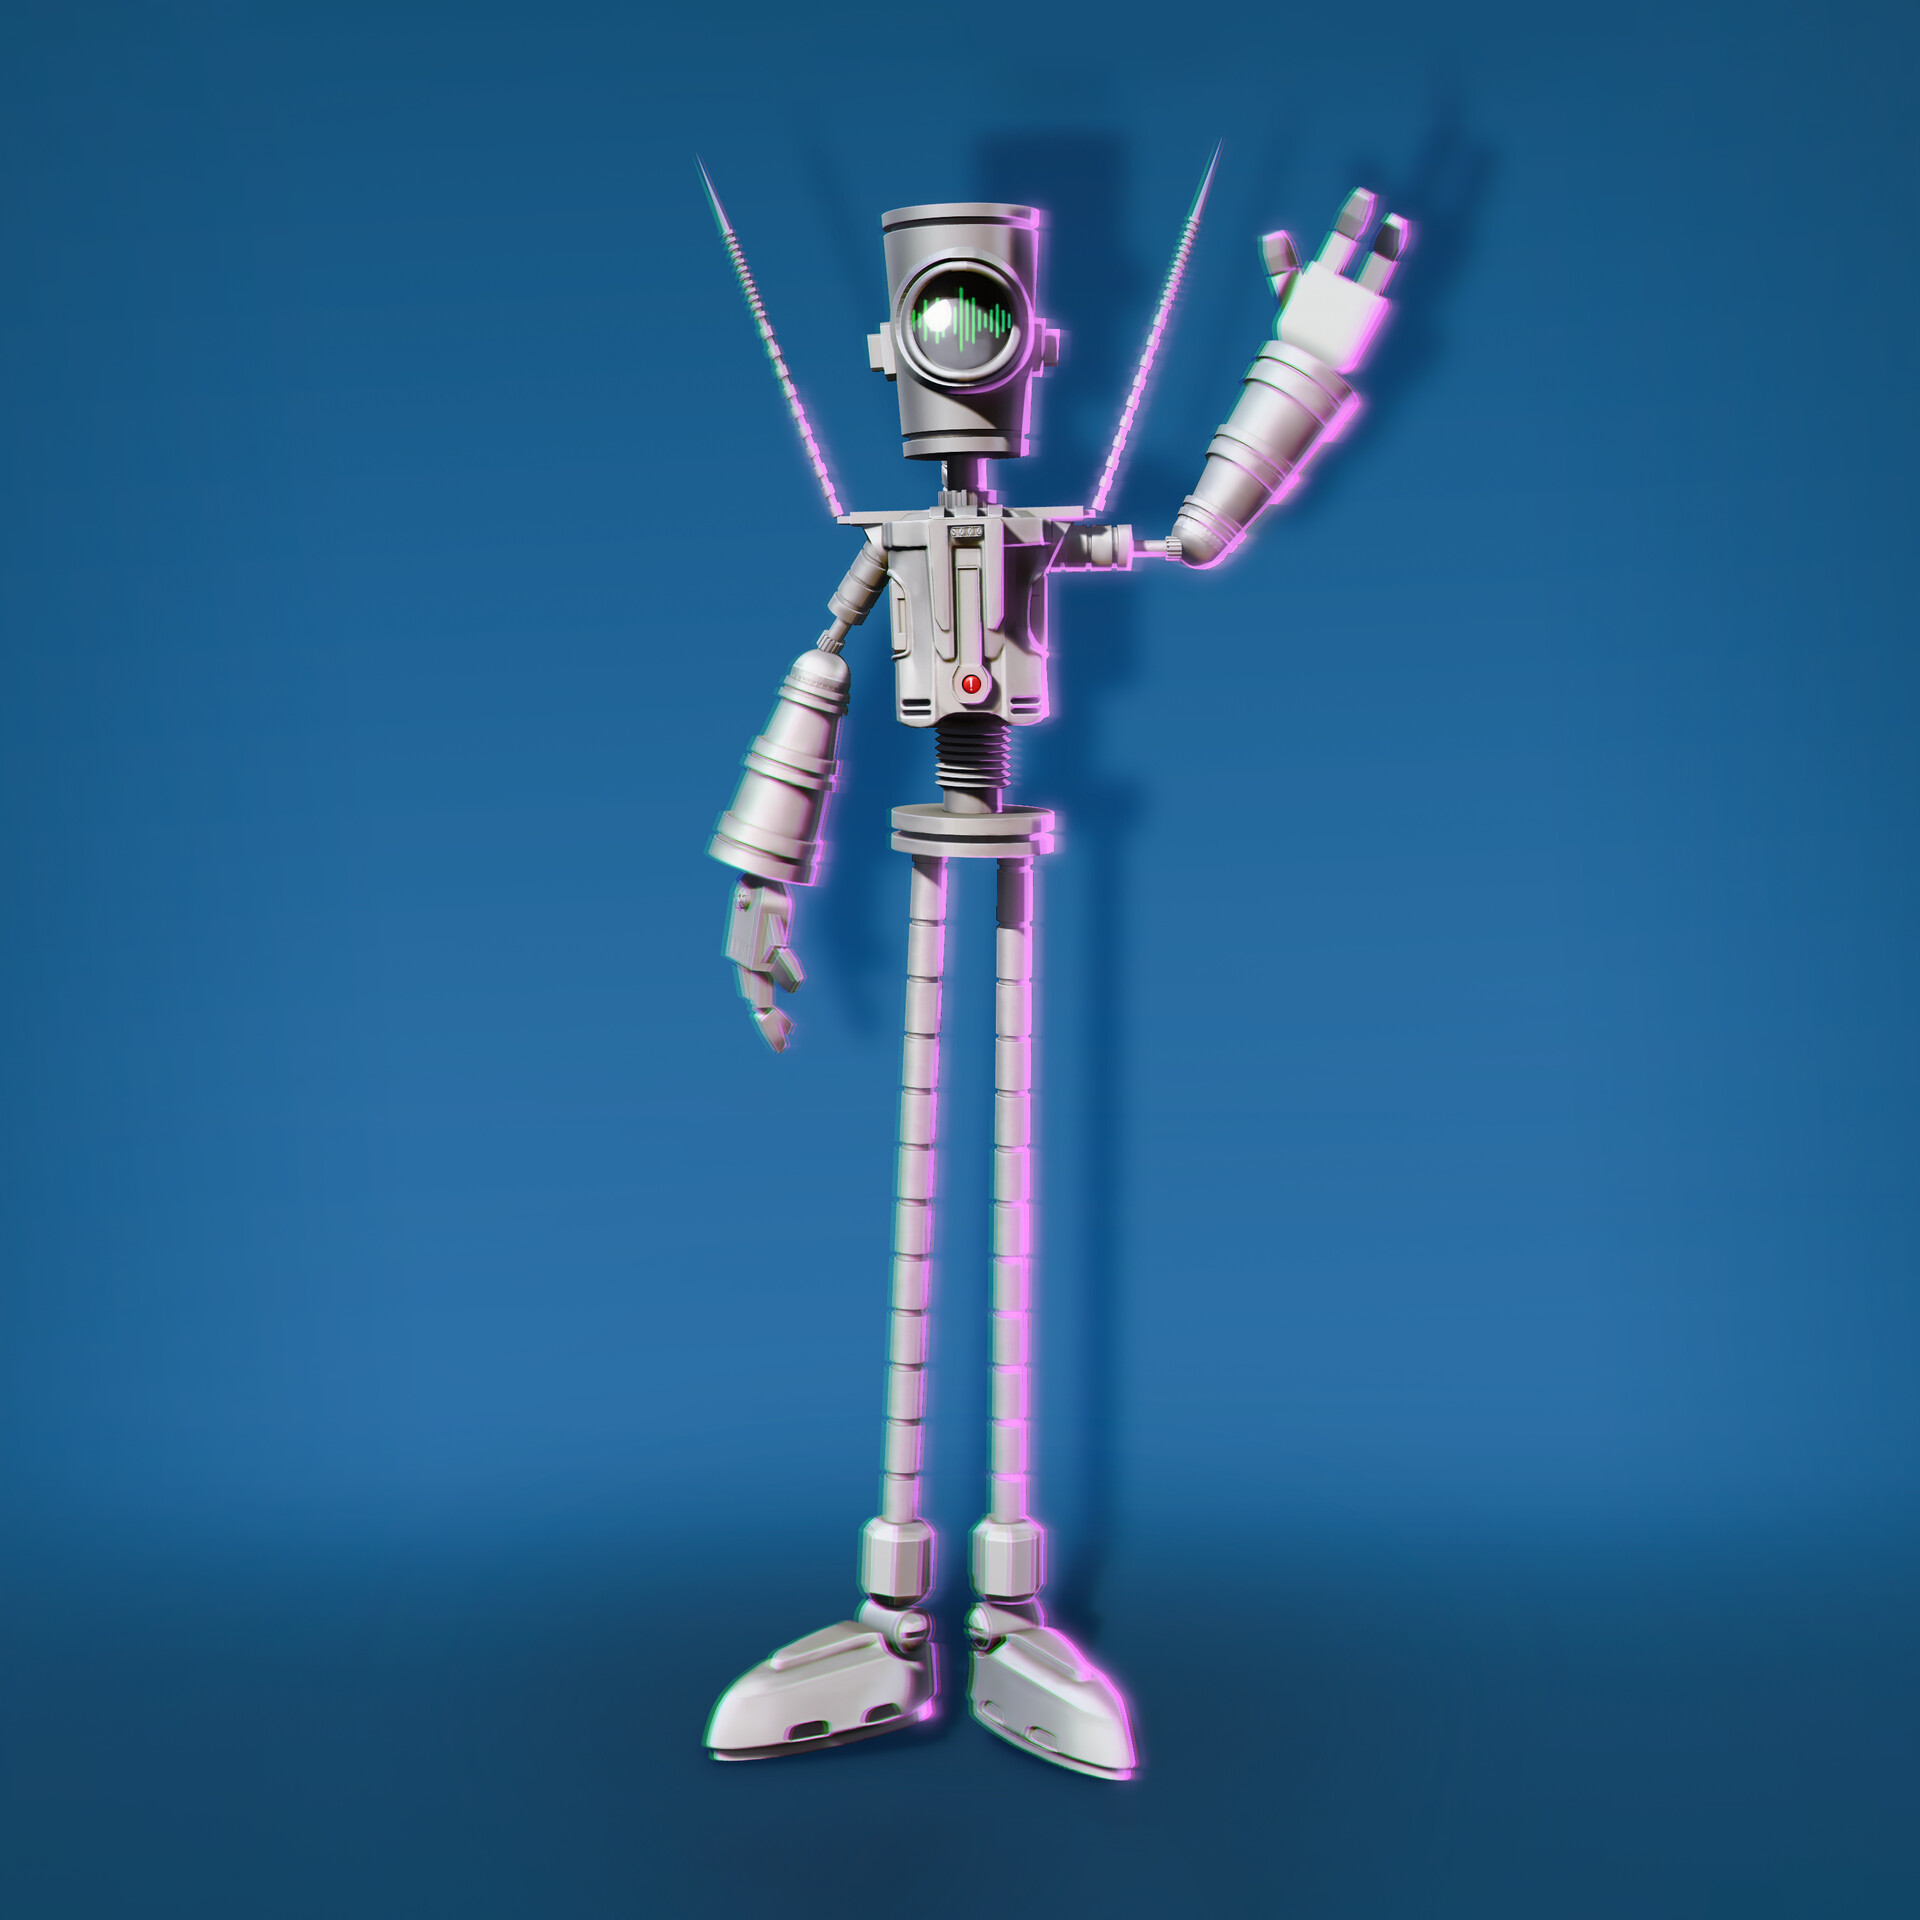 Mr. Robot Wallpapers - Zheano Blog